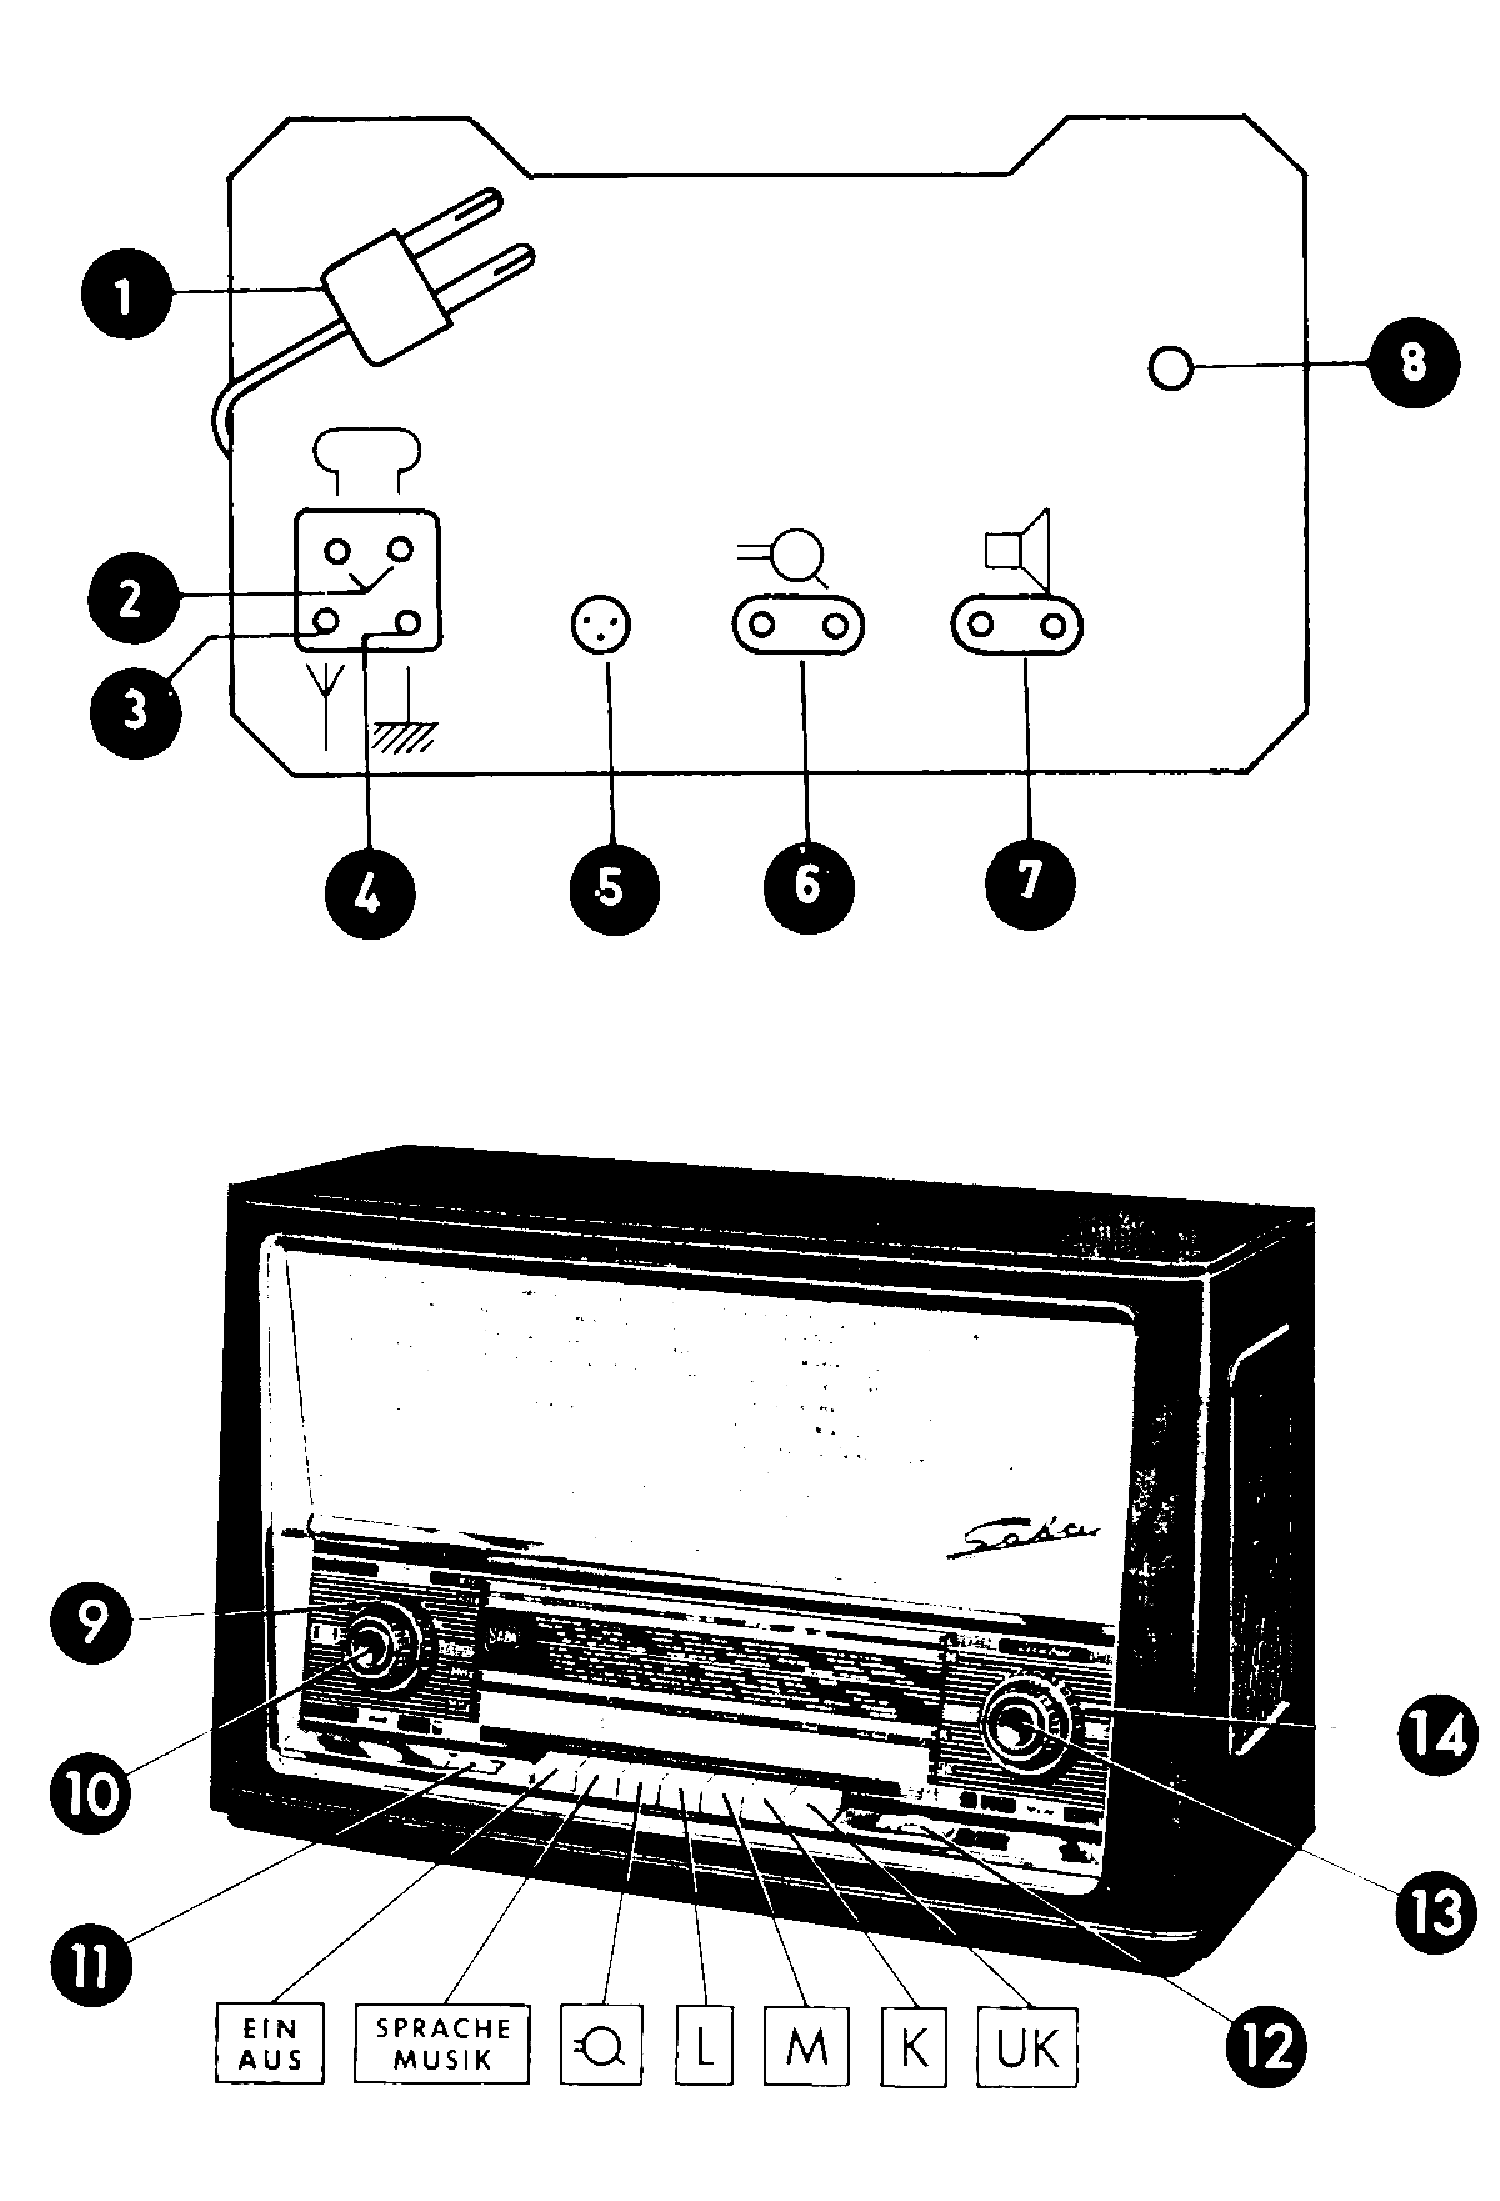 SABA WILDBAD9 AM-FM RECEIVER 1958 SM service manual (2nd page)